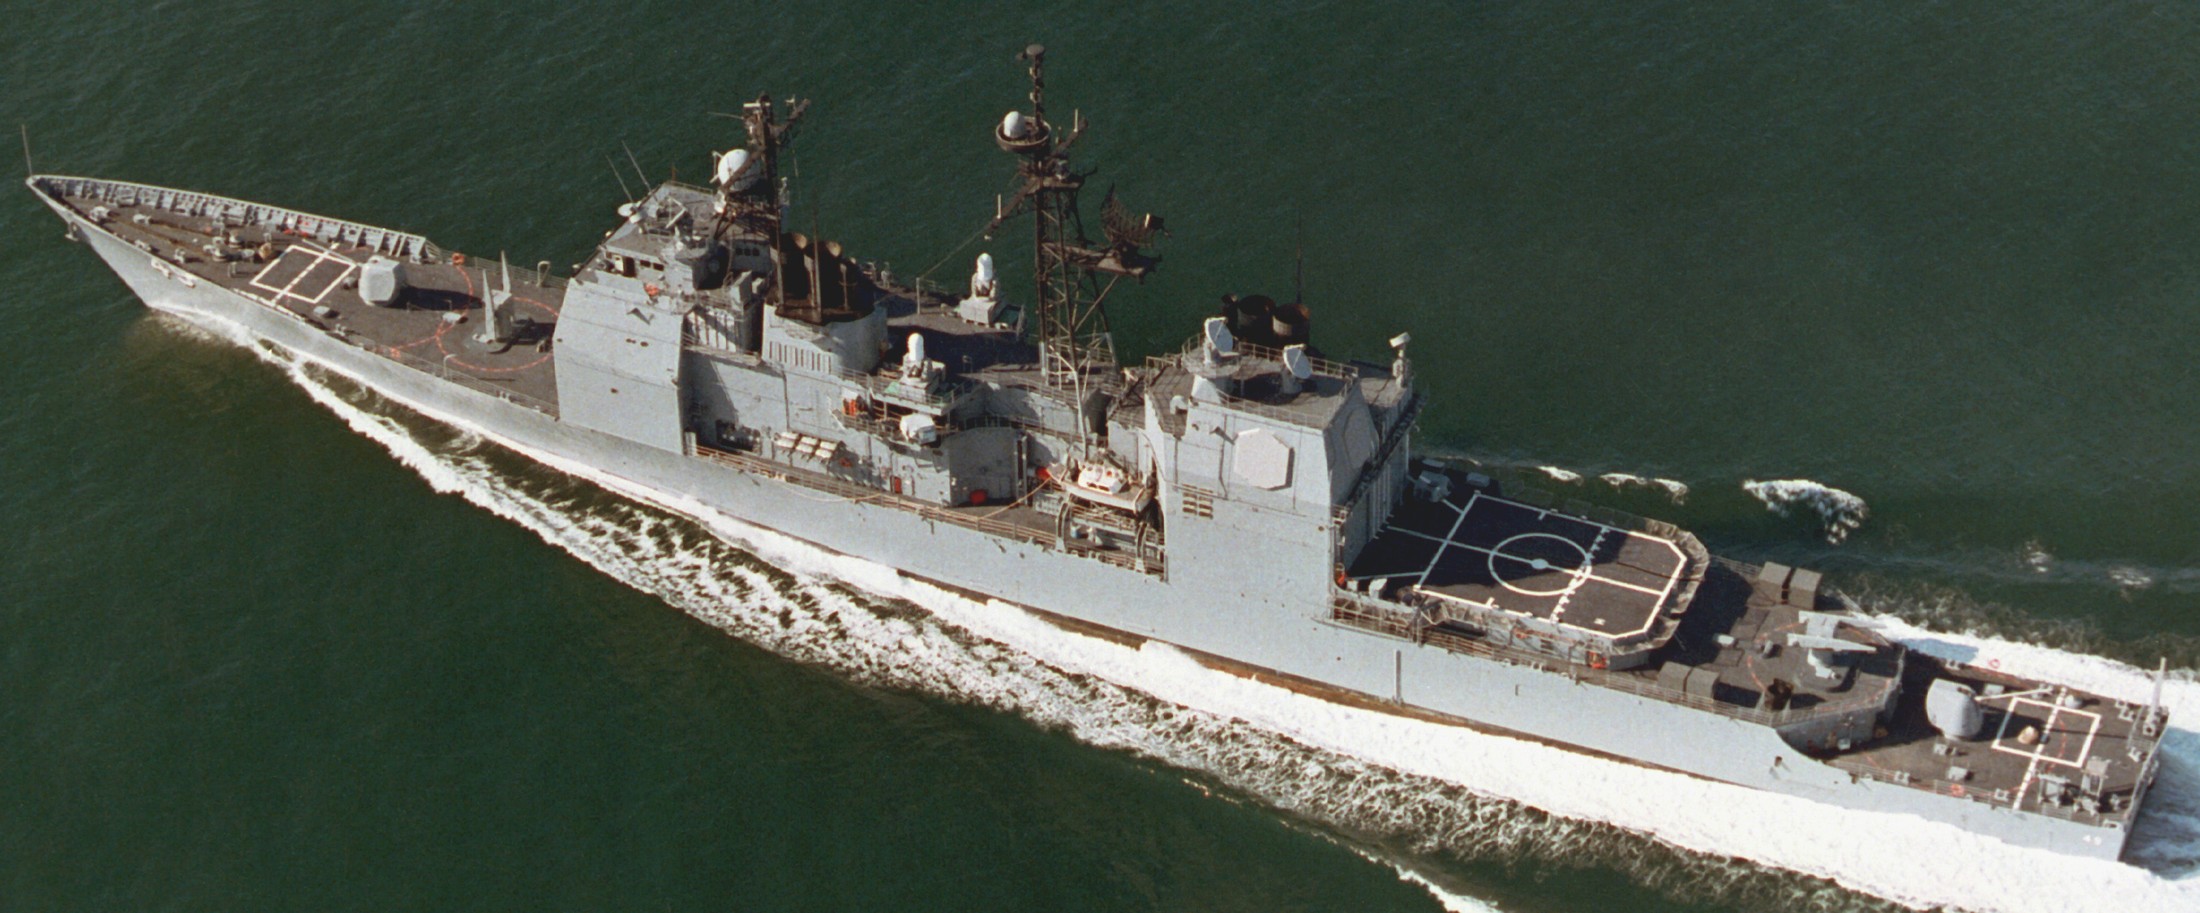 cg-49 uss vincennes ticonderoga class guided missile cruiser aegis us navy 41